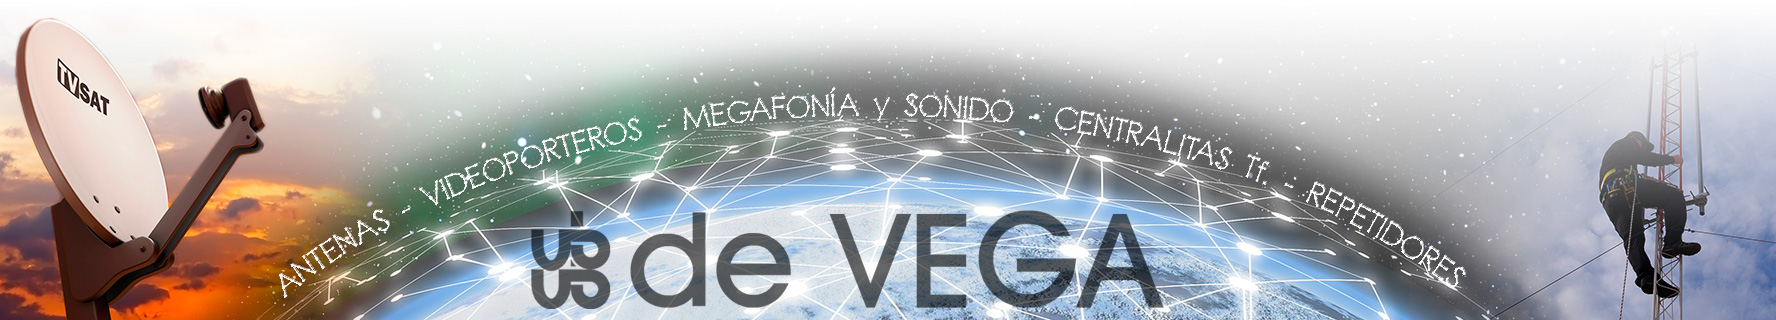 Electrónica de Vega - Zamora. Antenas, videoporteros, redes, megafonía.